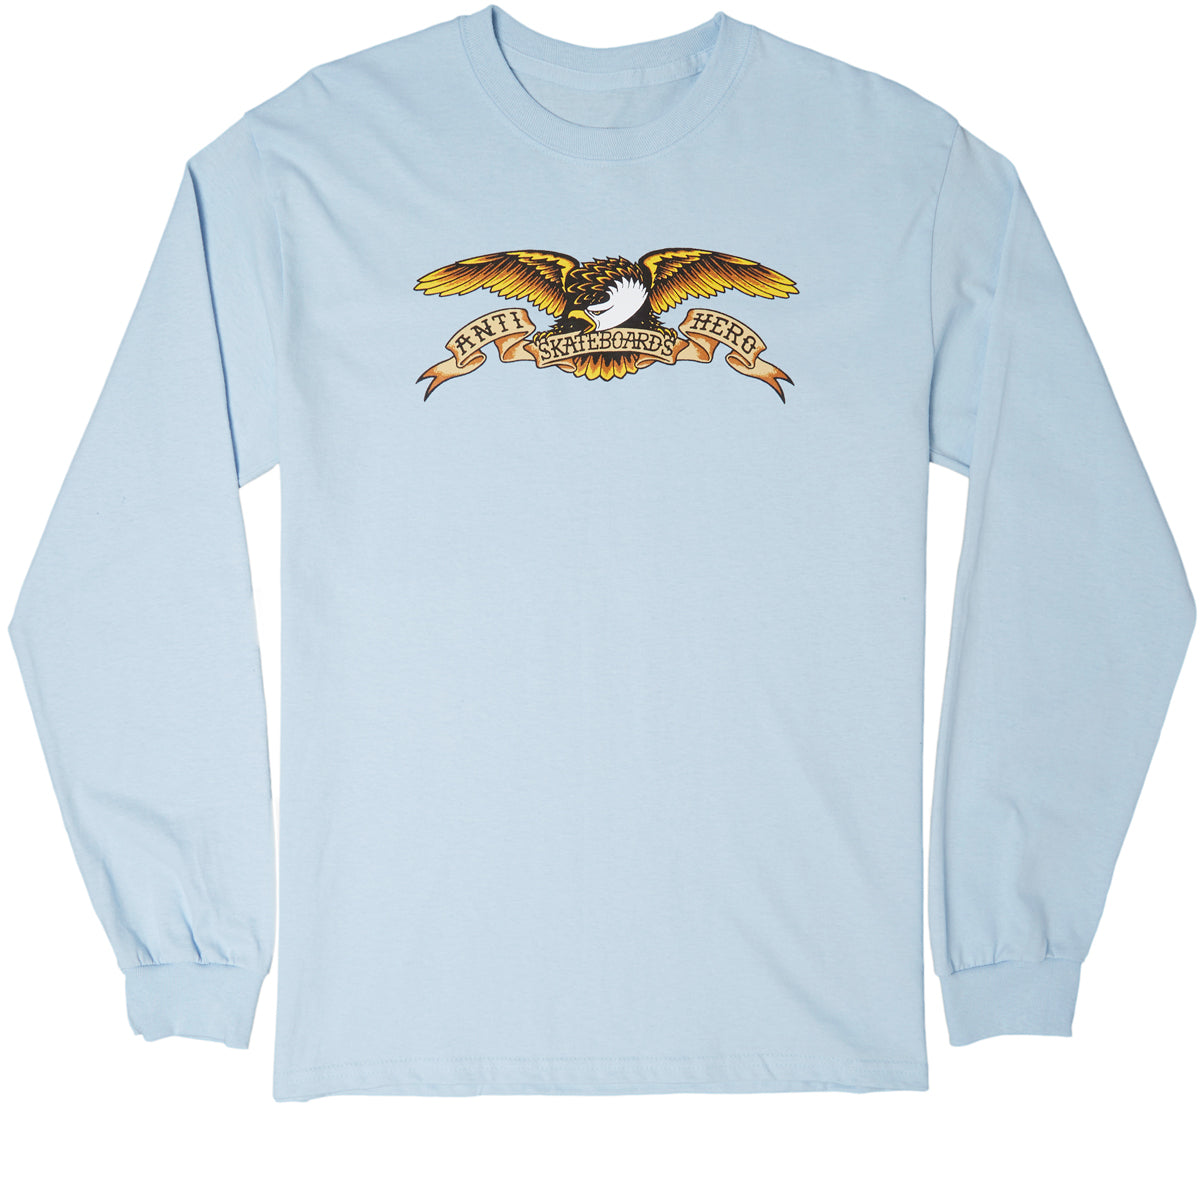 Anti-Hero Eagle Long Sleeve T-Shirt - Light Blue image 1